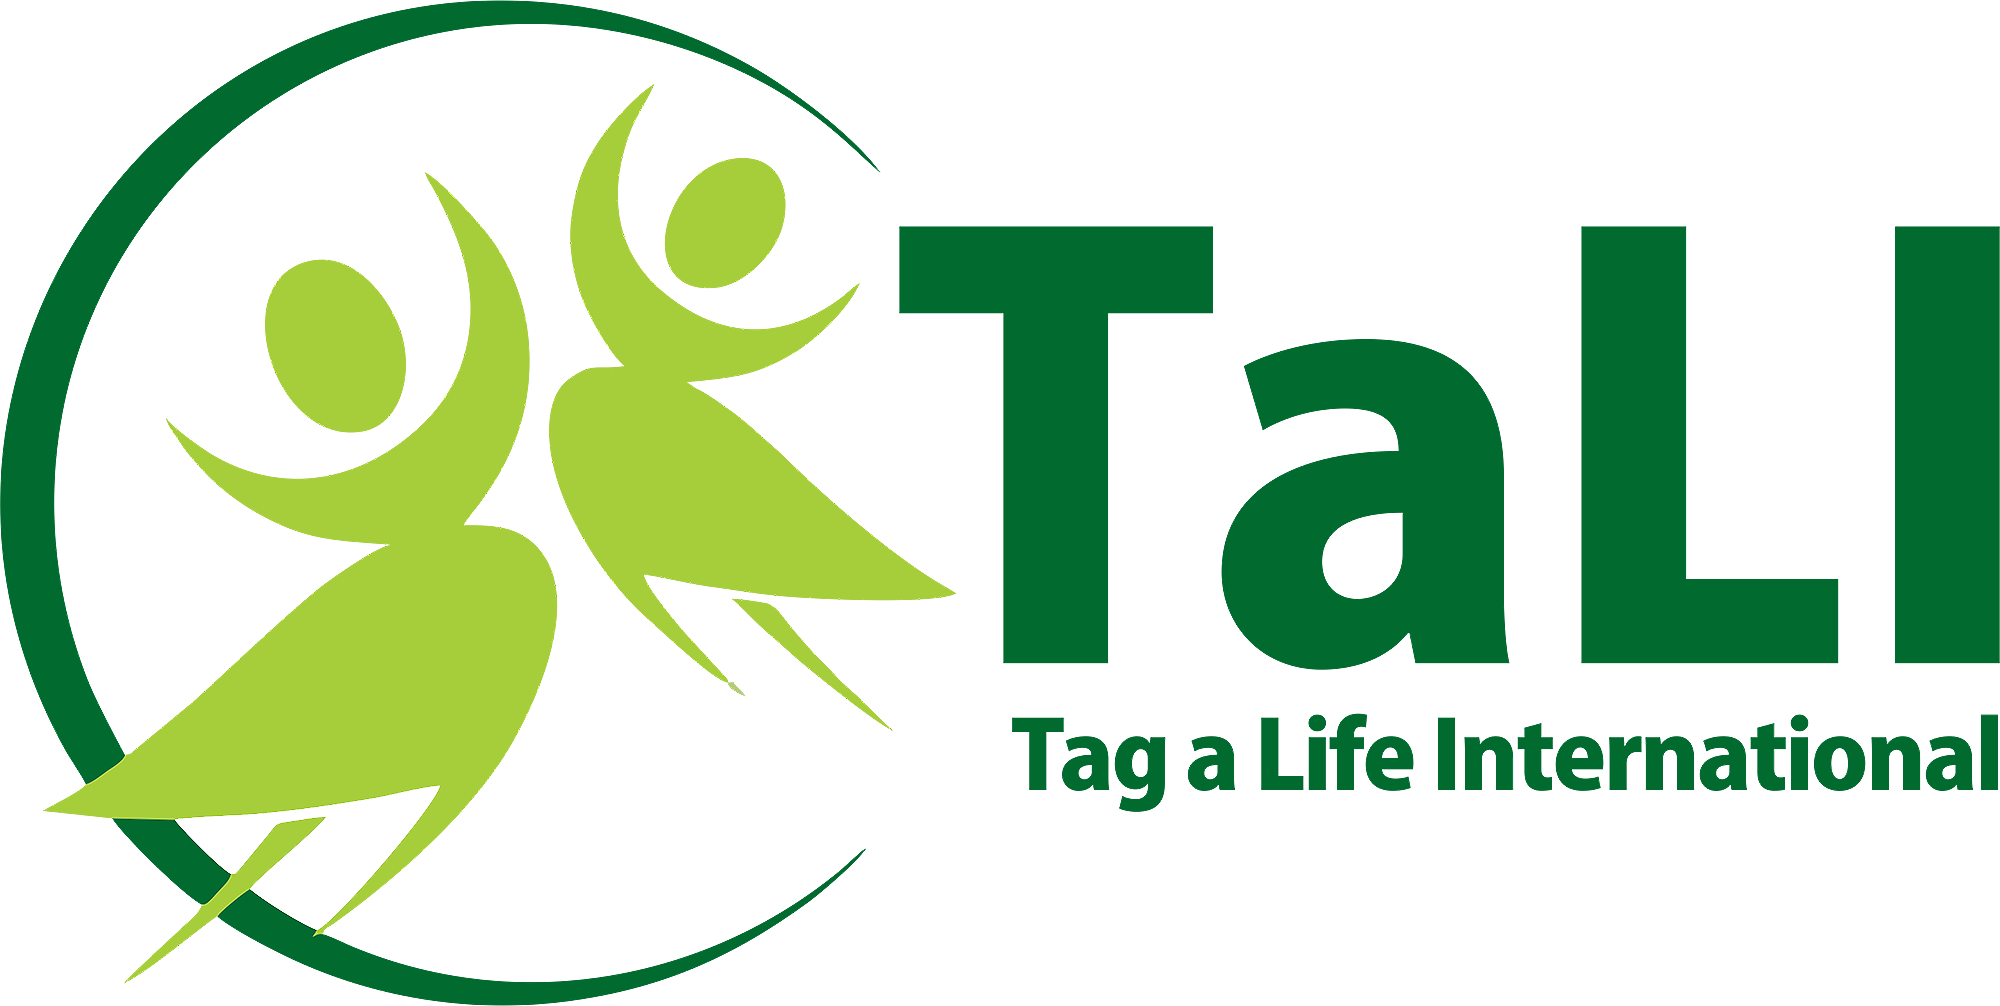 Tag a Life International